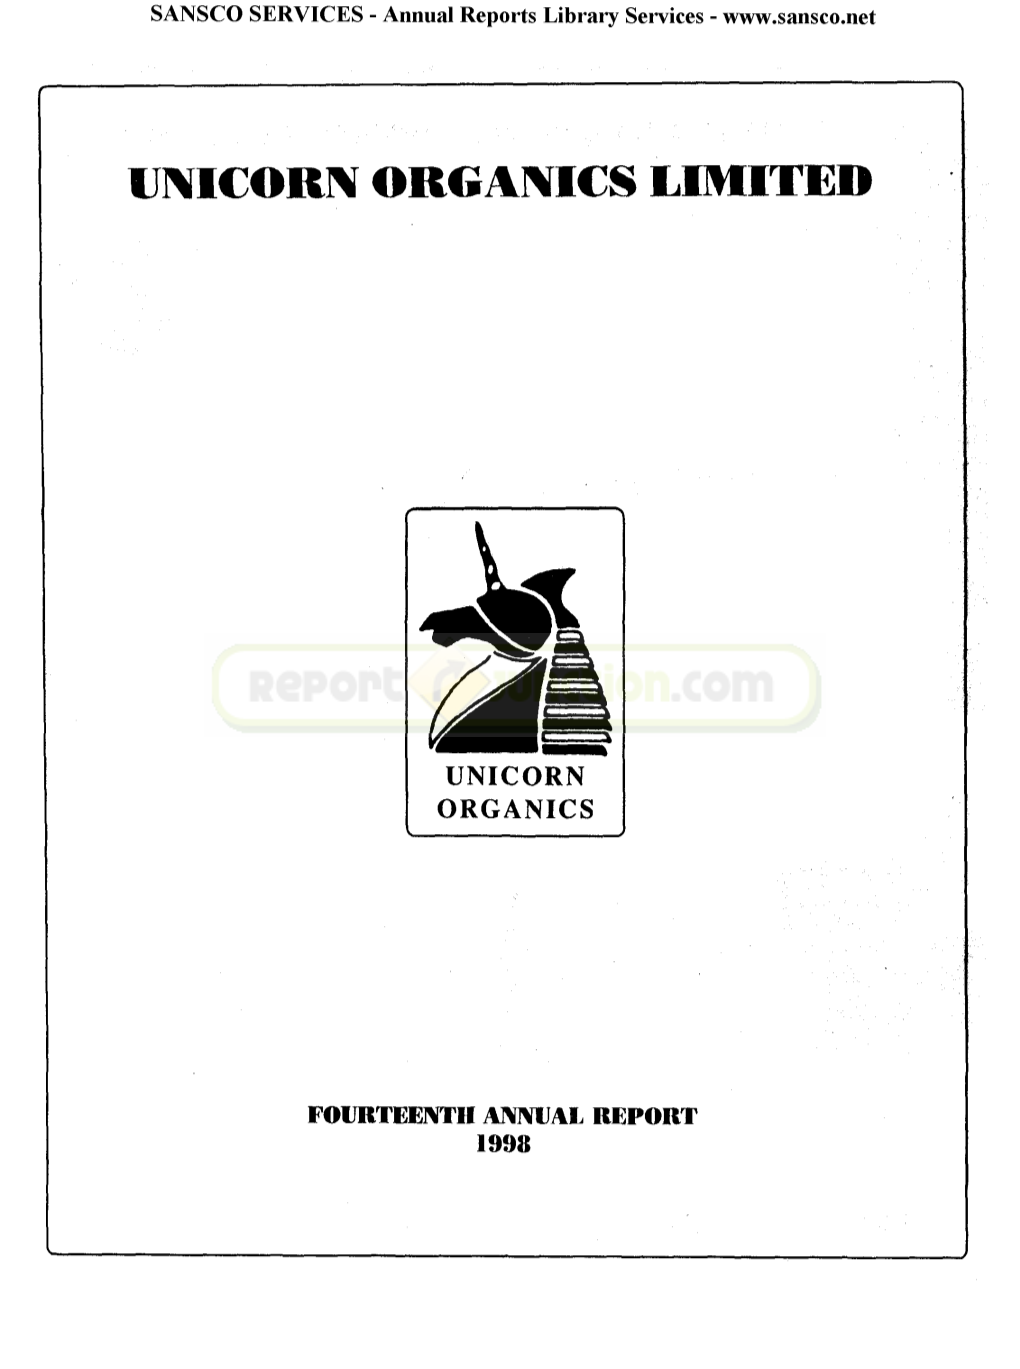 Unicorn Organics Limited